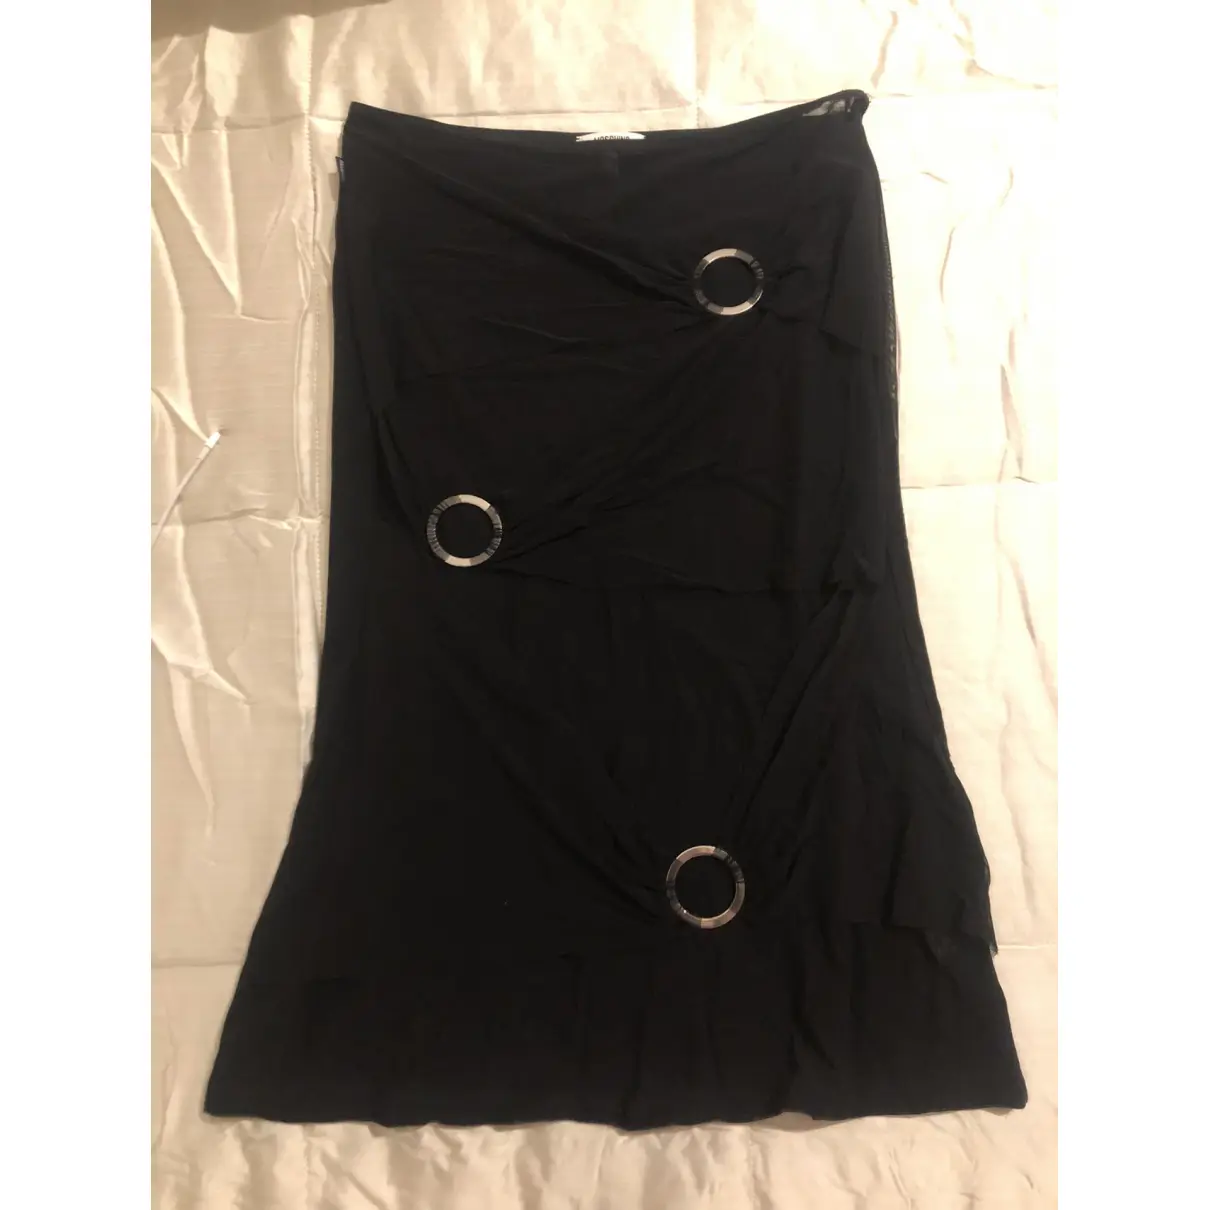 Buy Moschino Cheap And Chic Skirt online